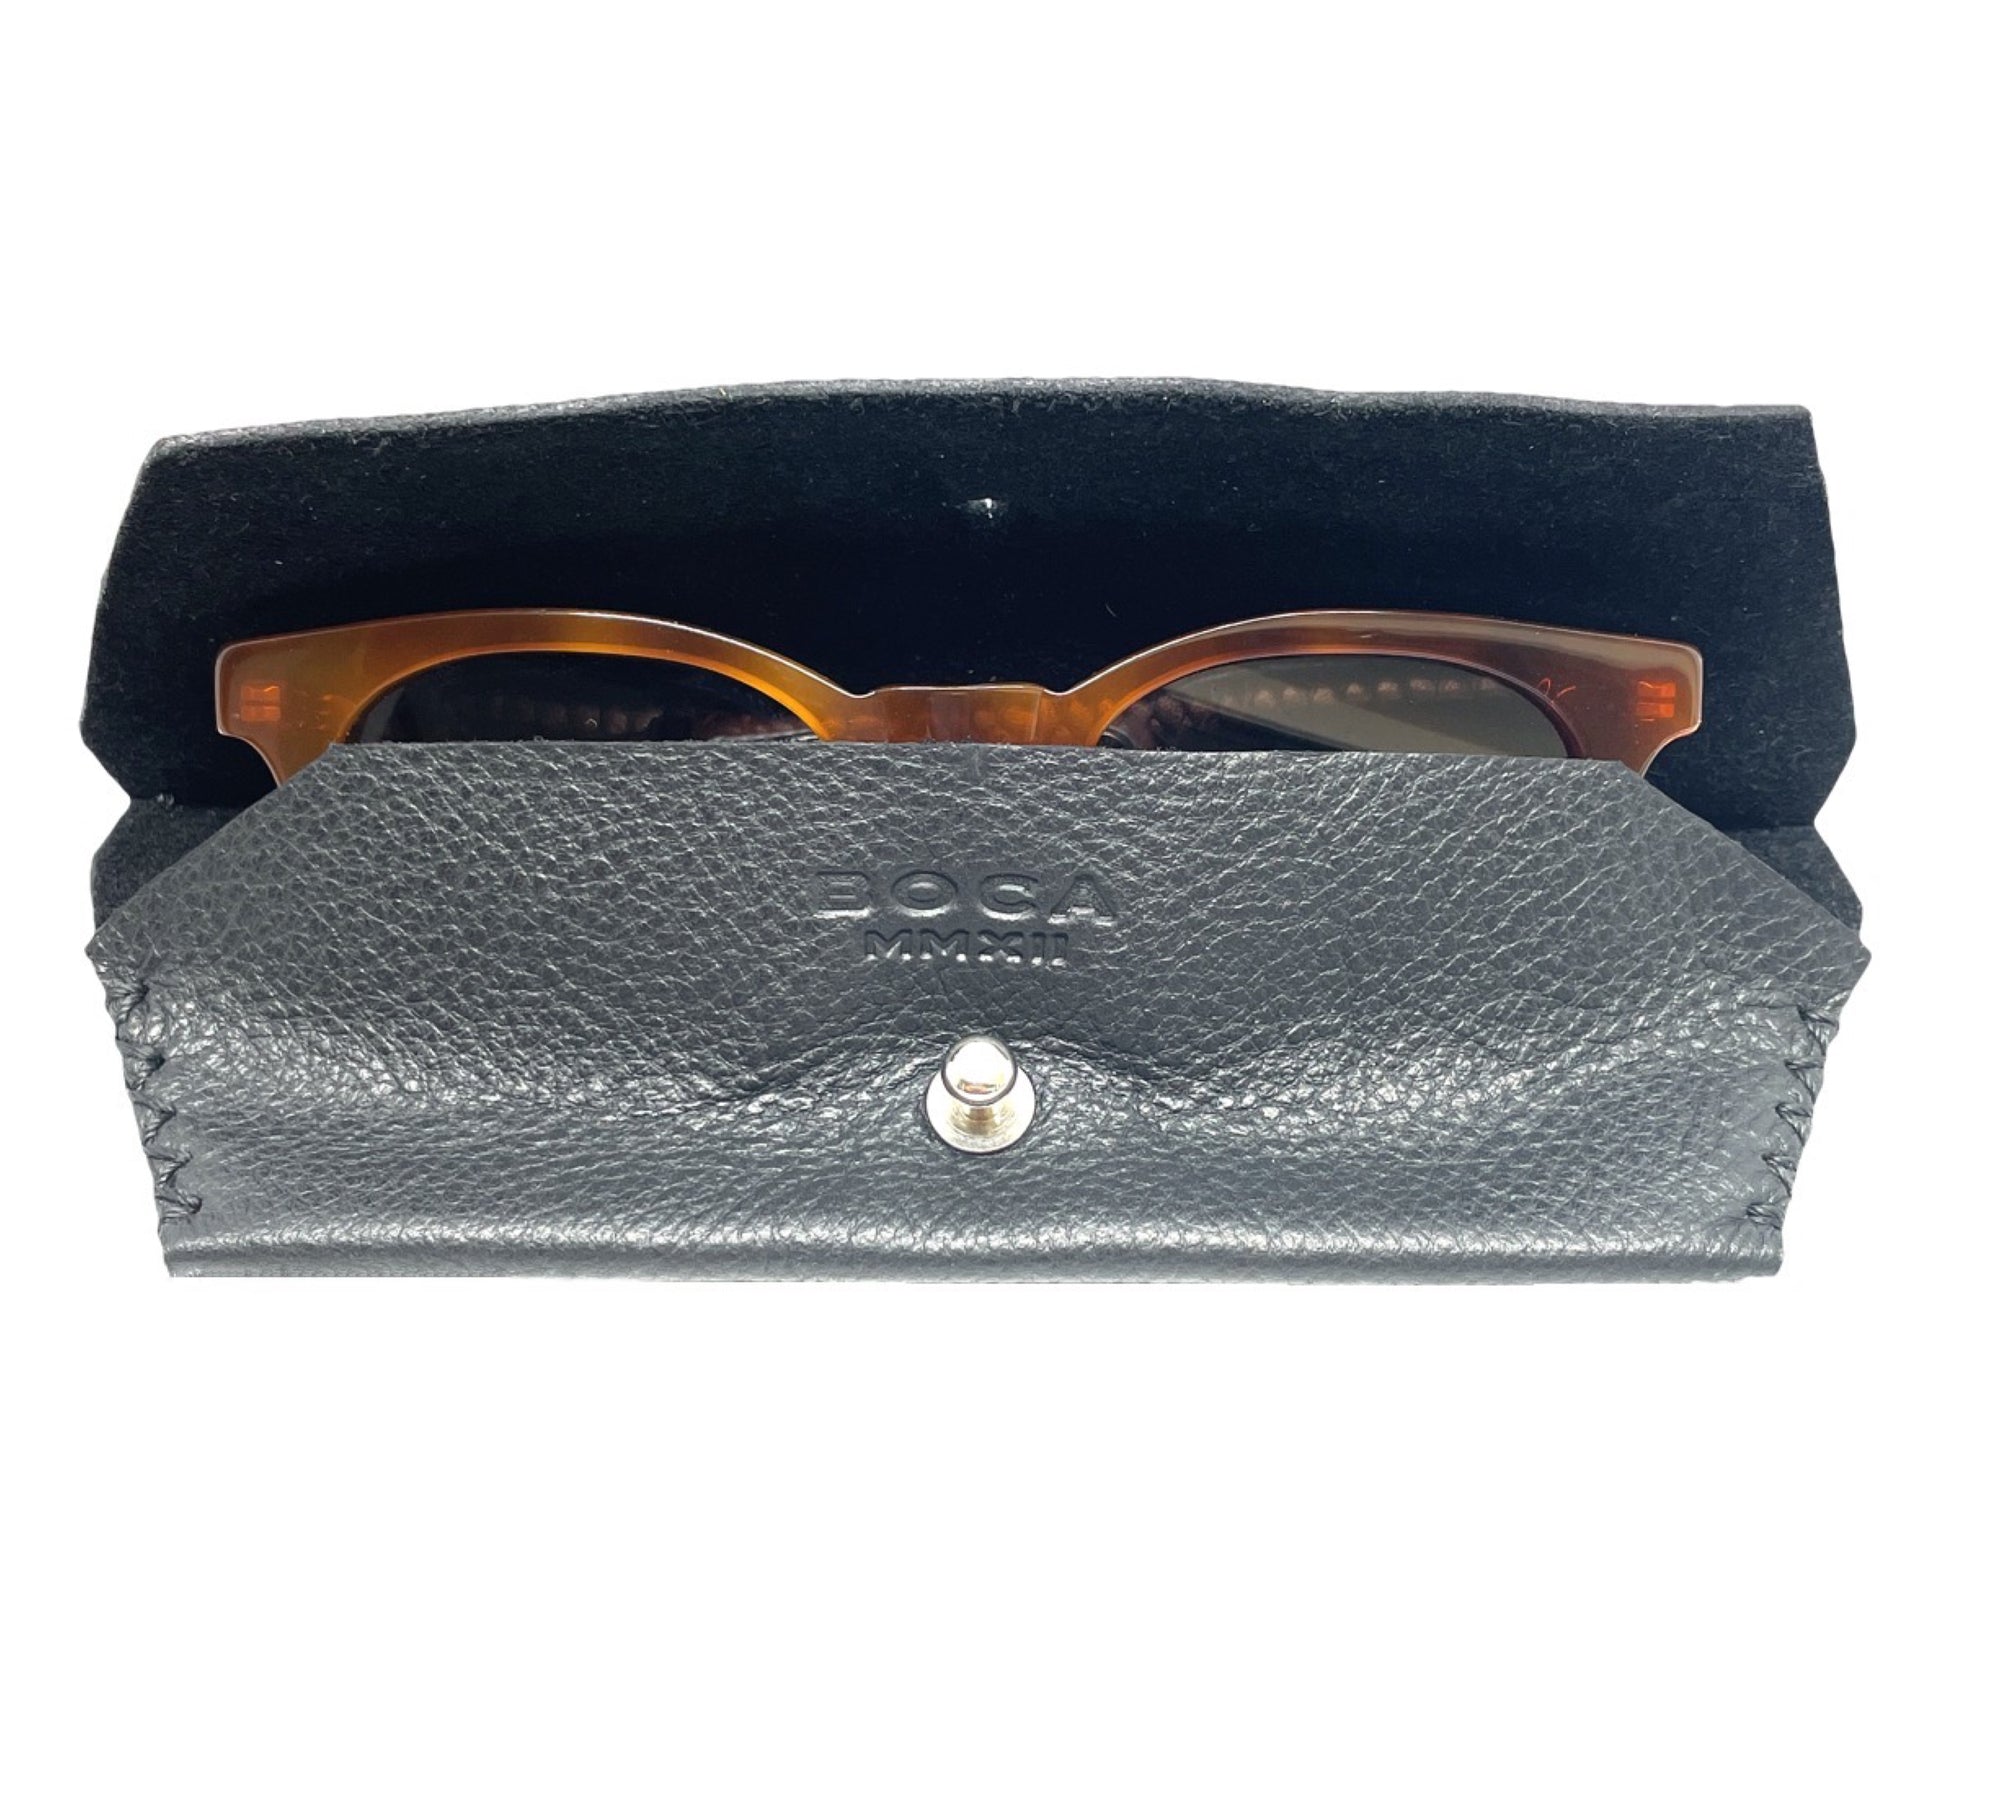 Leather sunglasses case